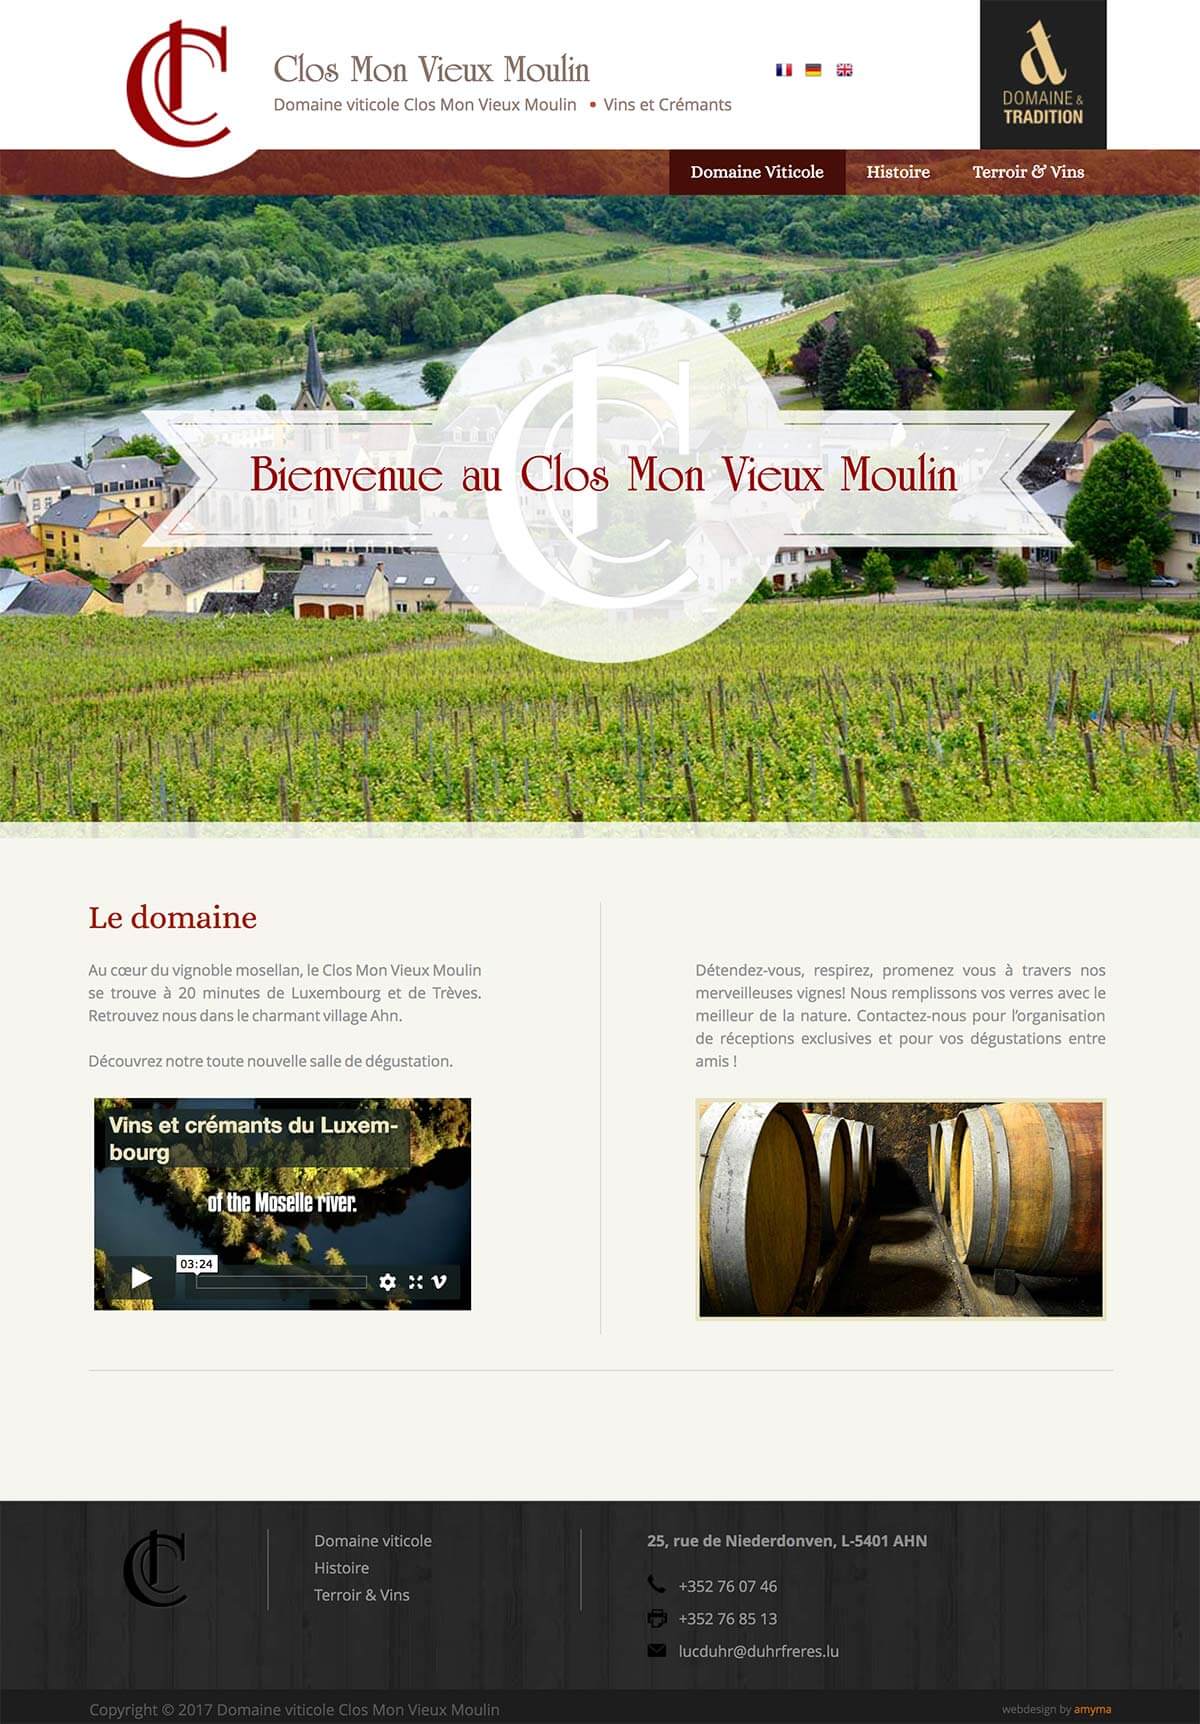 Wine estate DUHR Frères